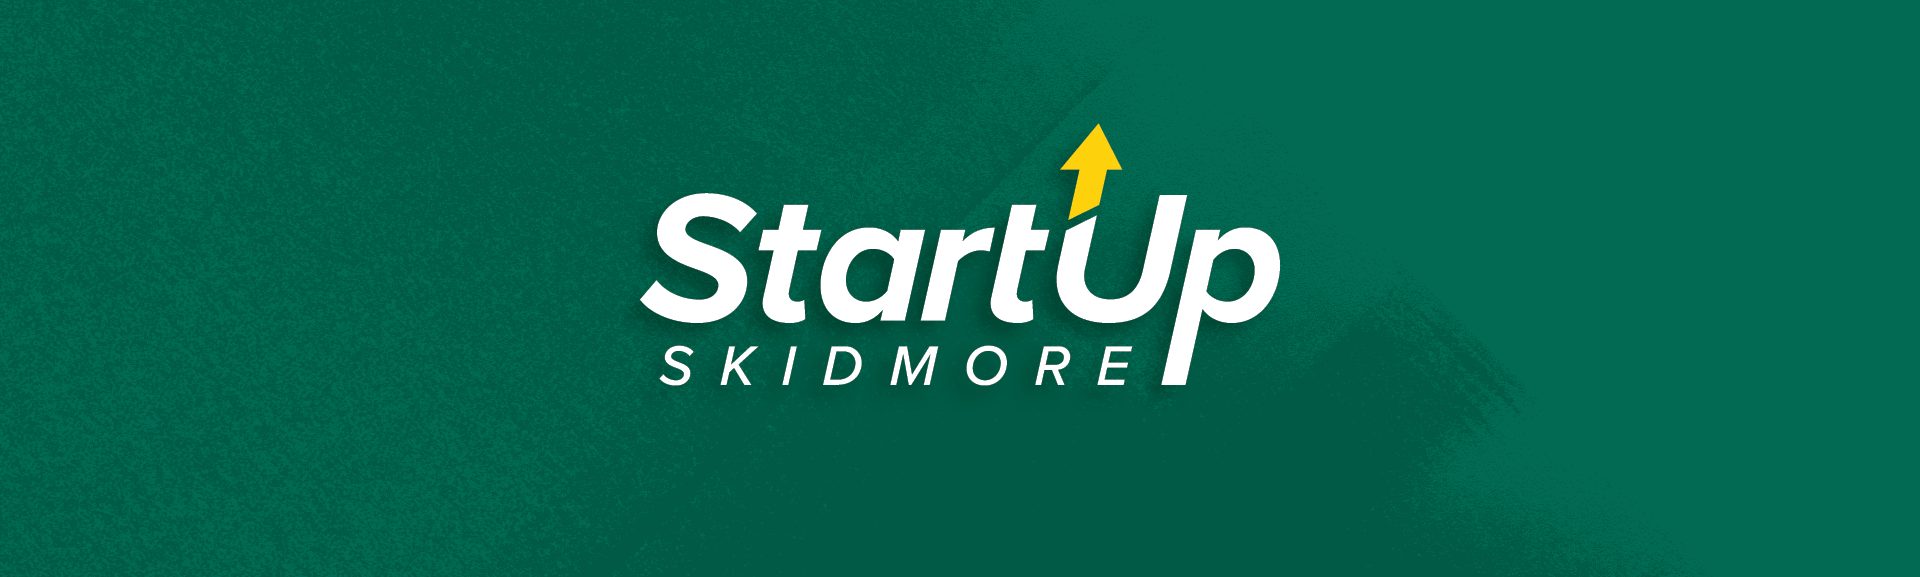 Start Up Skidmore